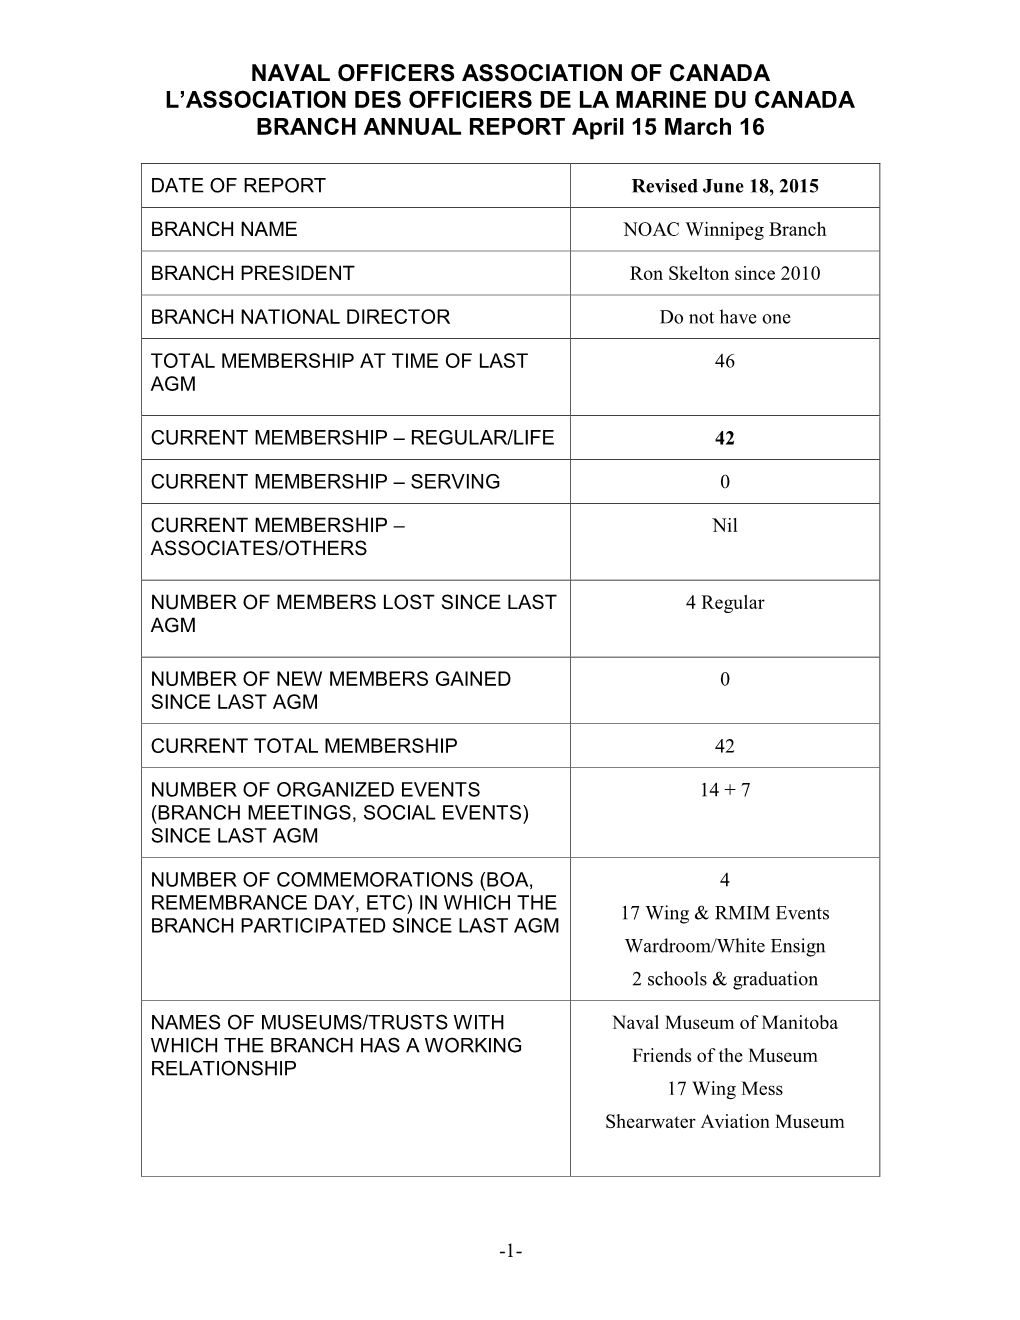 DATE of REPORT Revised June 18, 2015